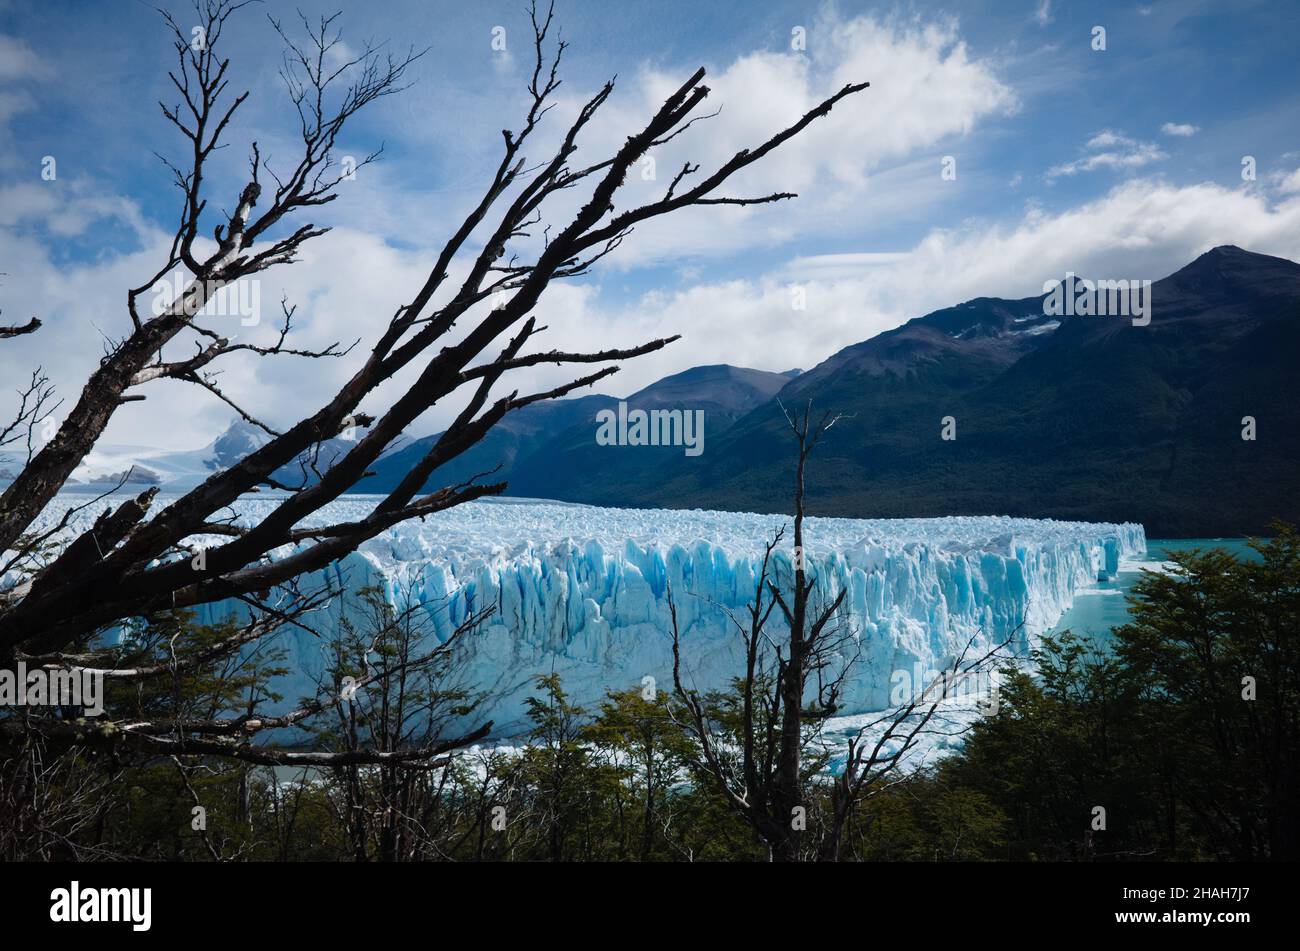 Side view of Perito Moreno Glacier in Los Glaciares National Park, Argentina through tree branches of Magellanic subpolar forest Stock Photo